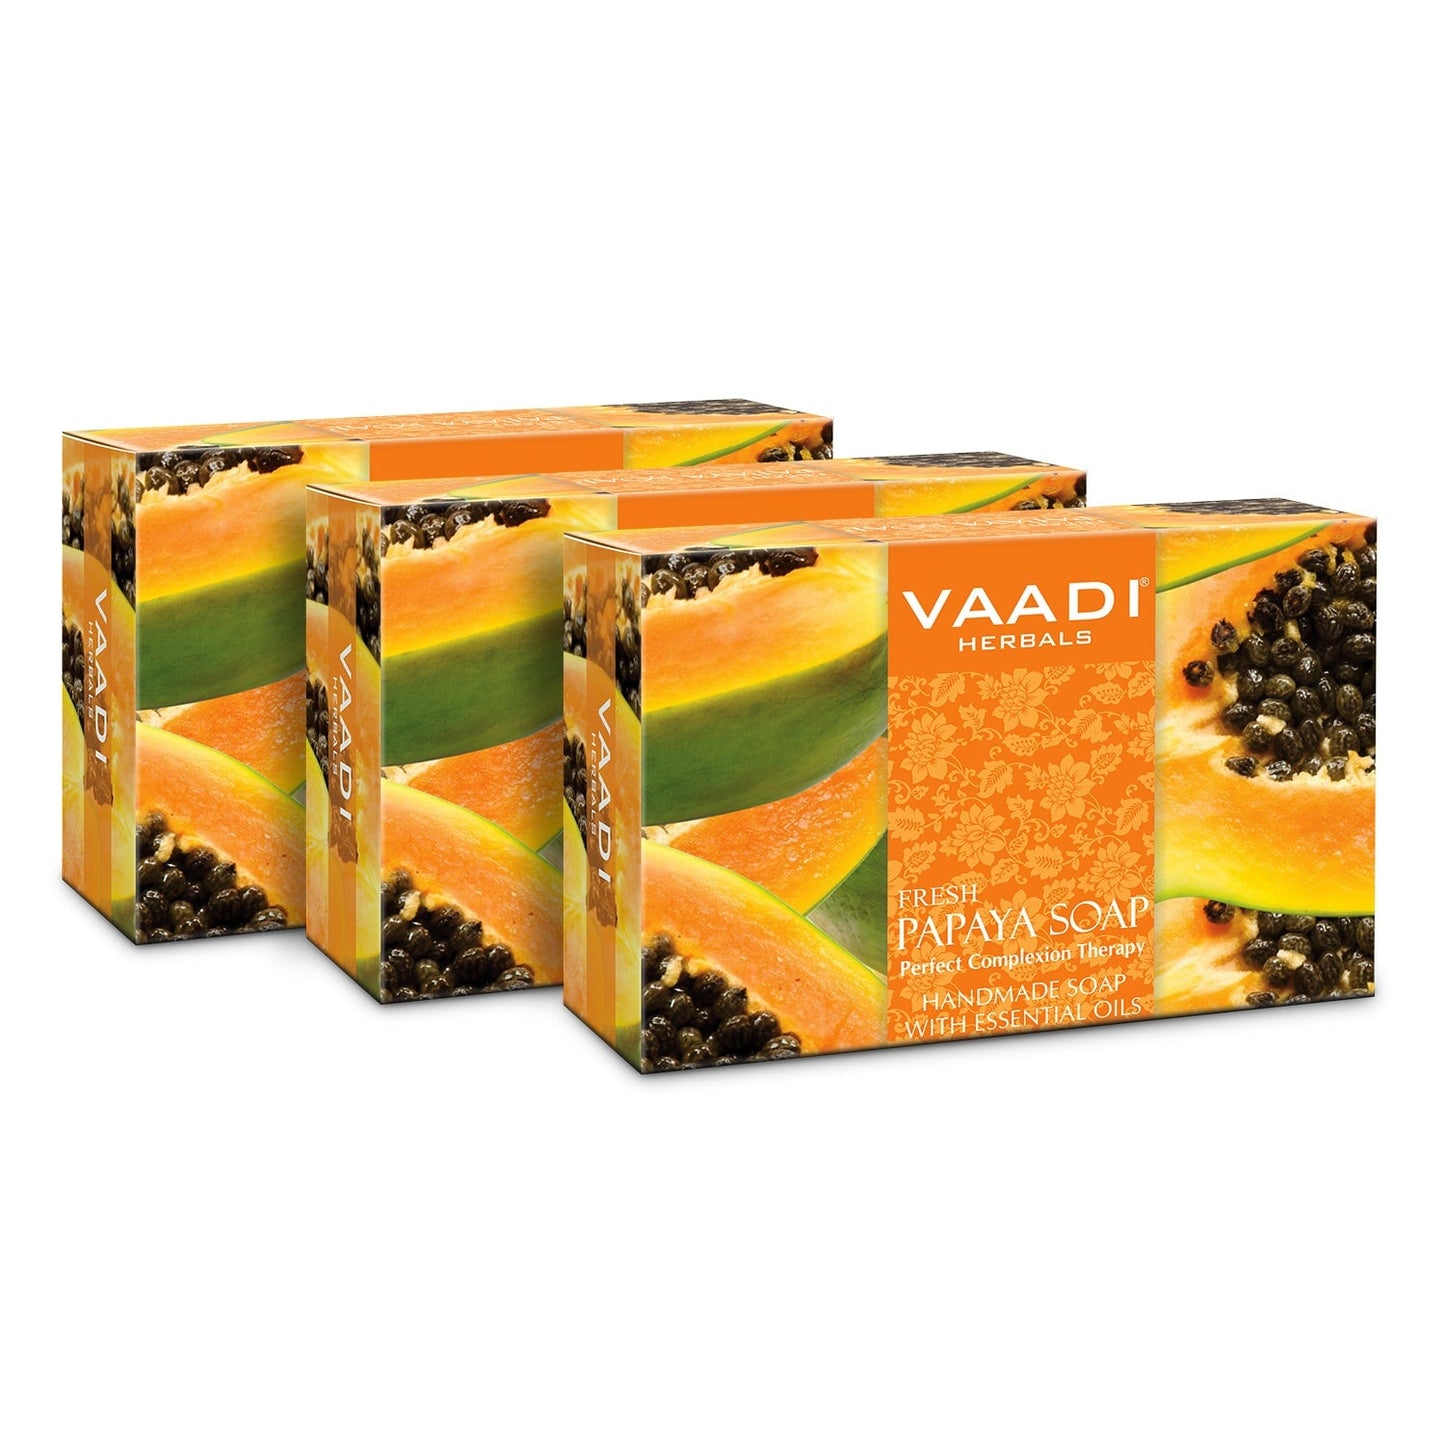 Organic Fresh Papaya Soap - Clears Impurities off Skin - Evens Skin Tone (3 x 75 gms / 2.7 oz)